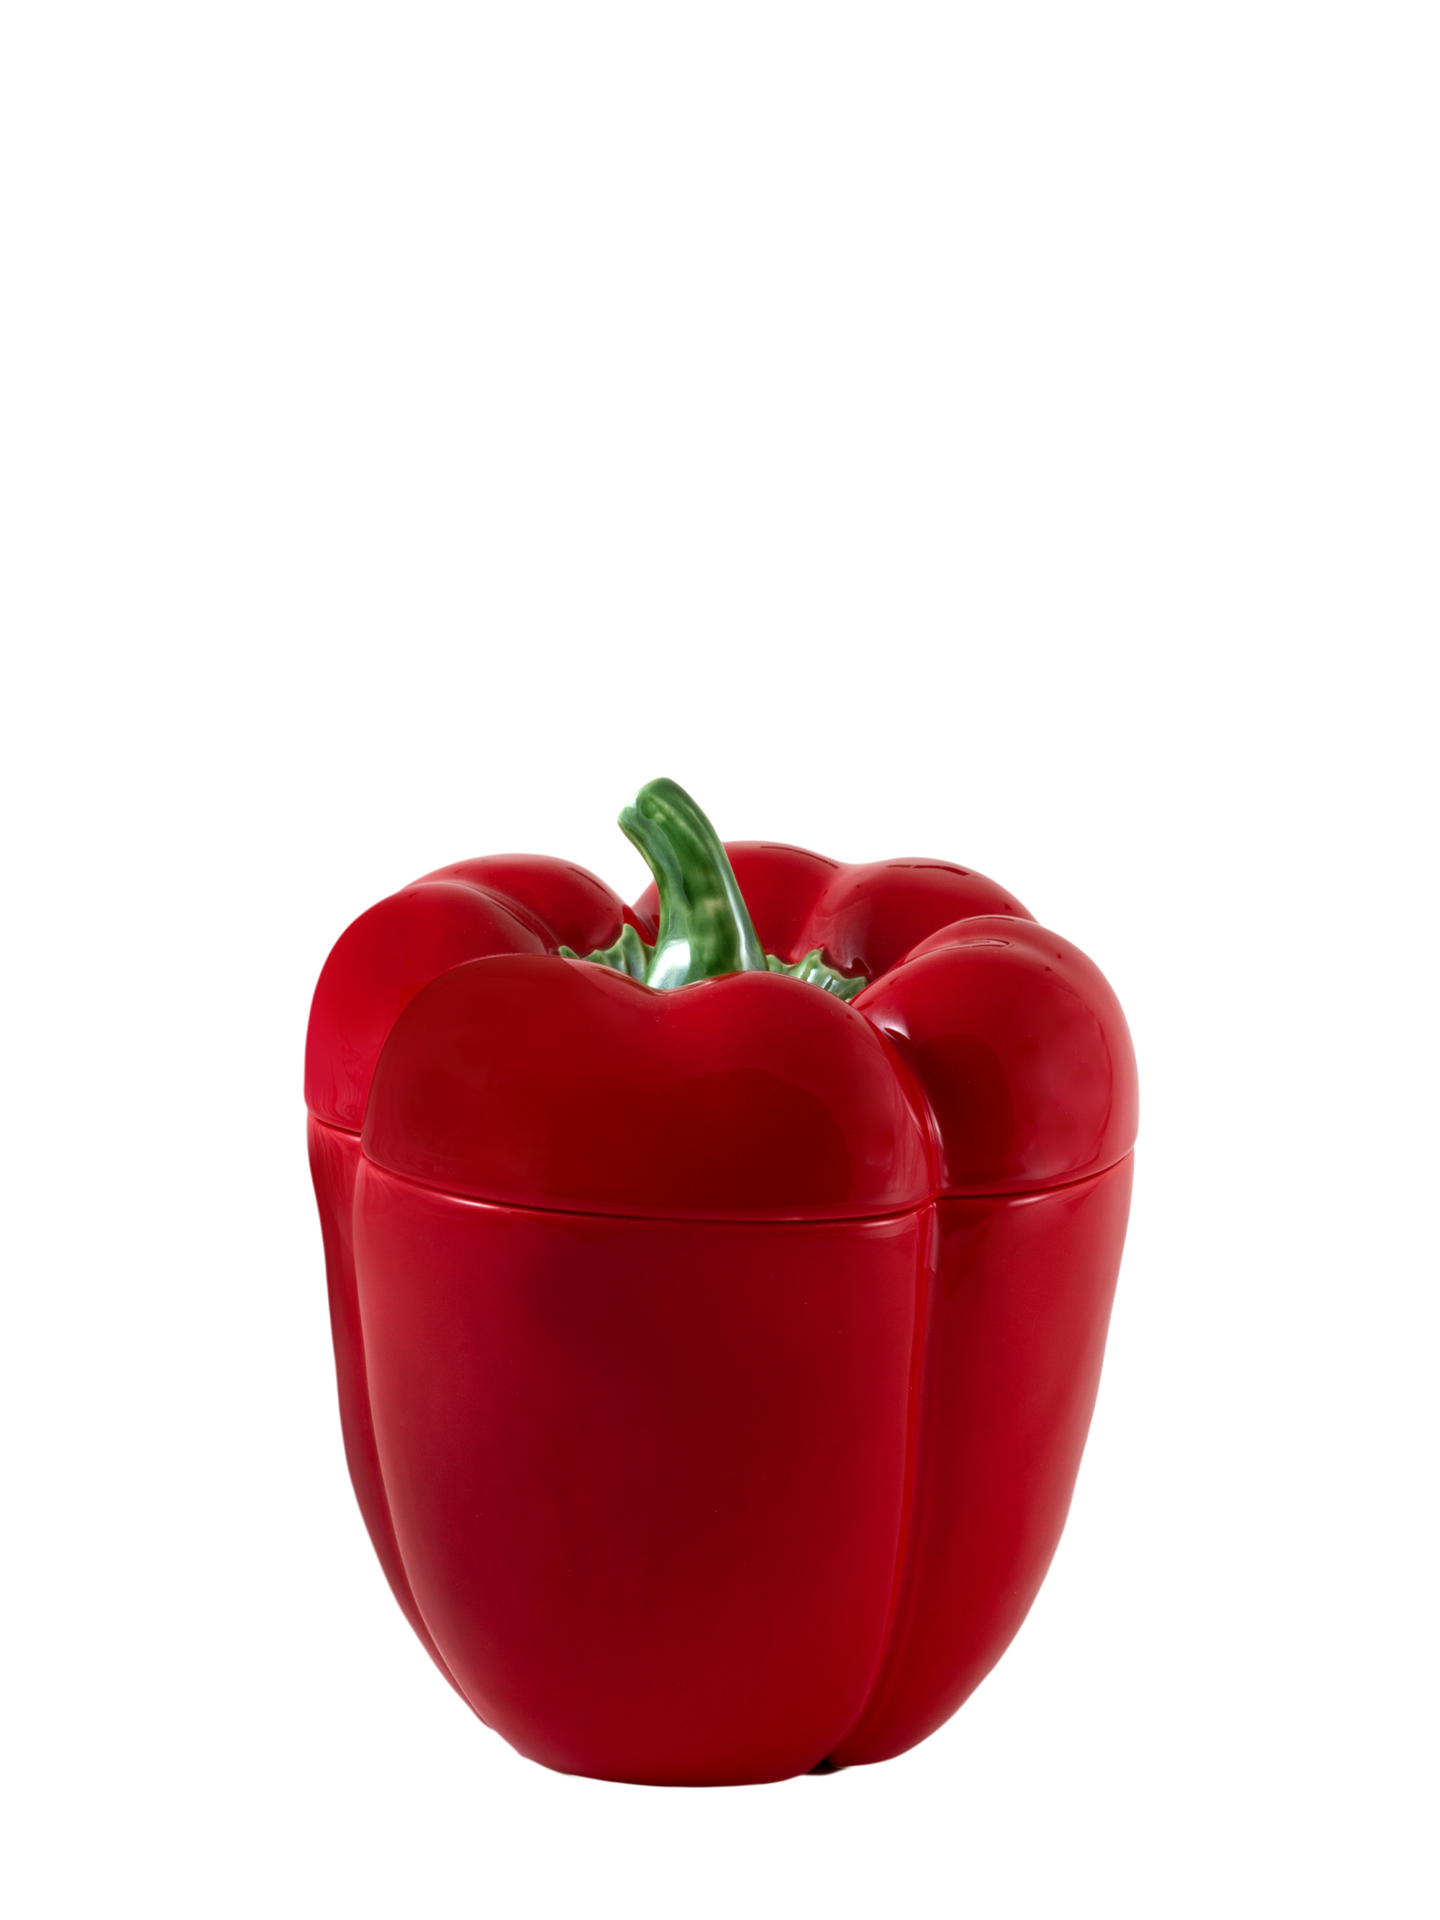 Medium Red Pepper Jar